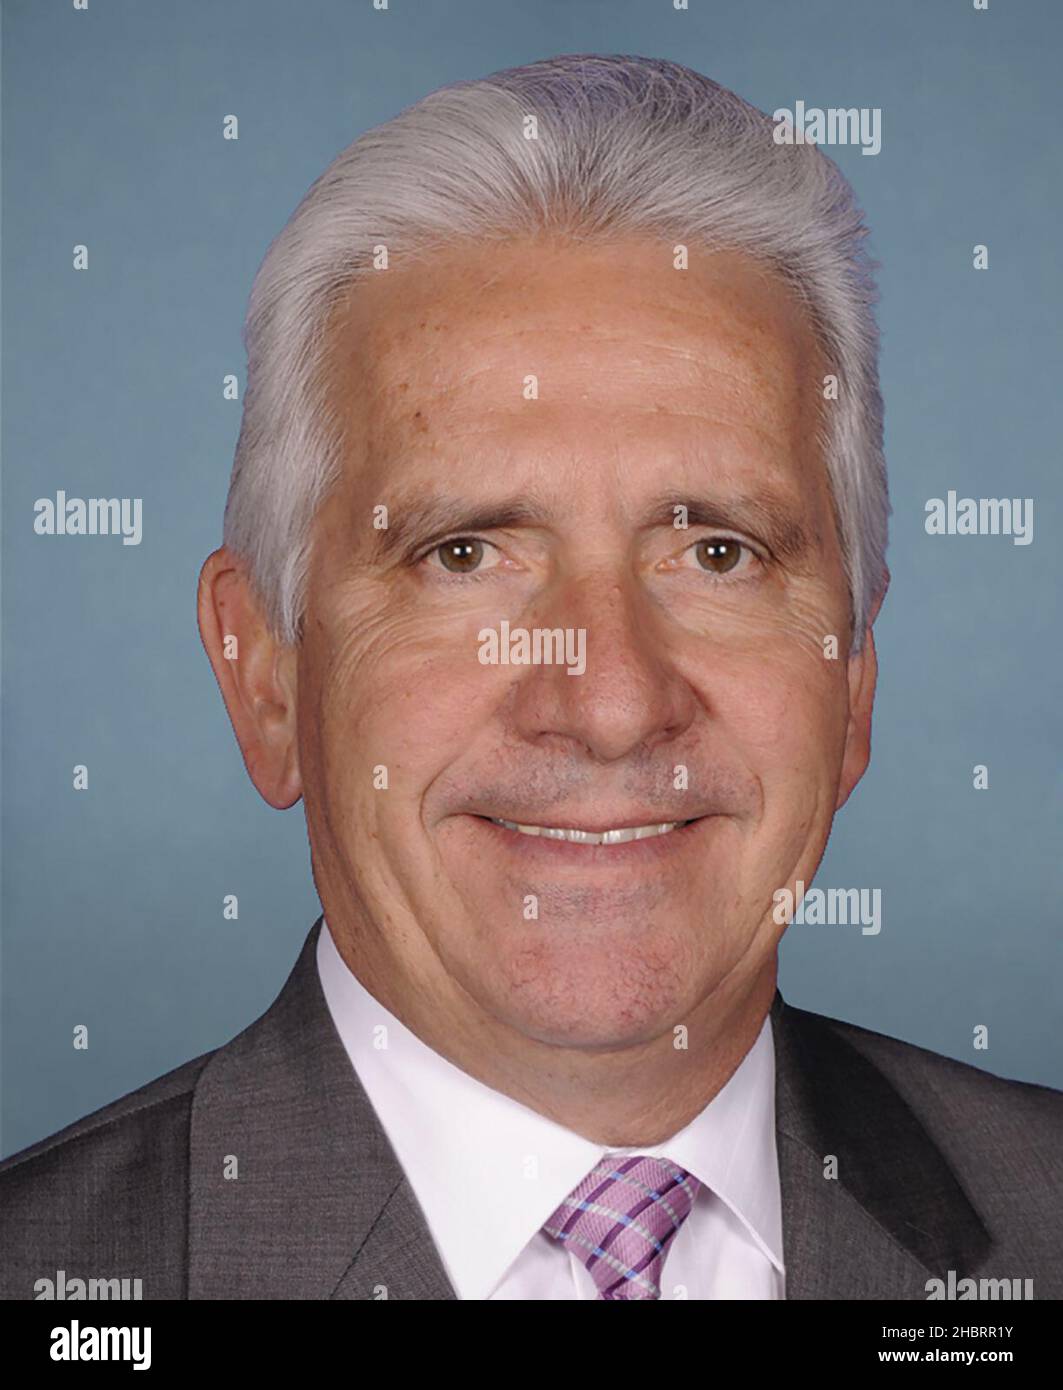 Congressional portrait of Jim Costa Stock Photo